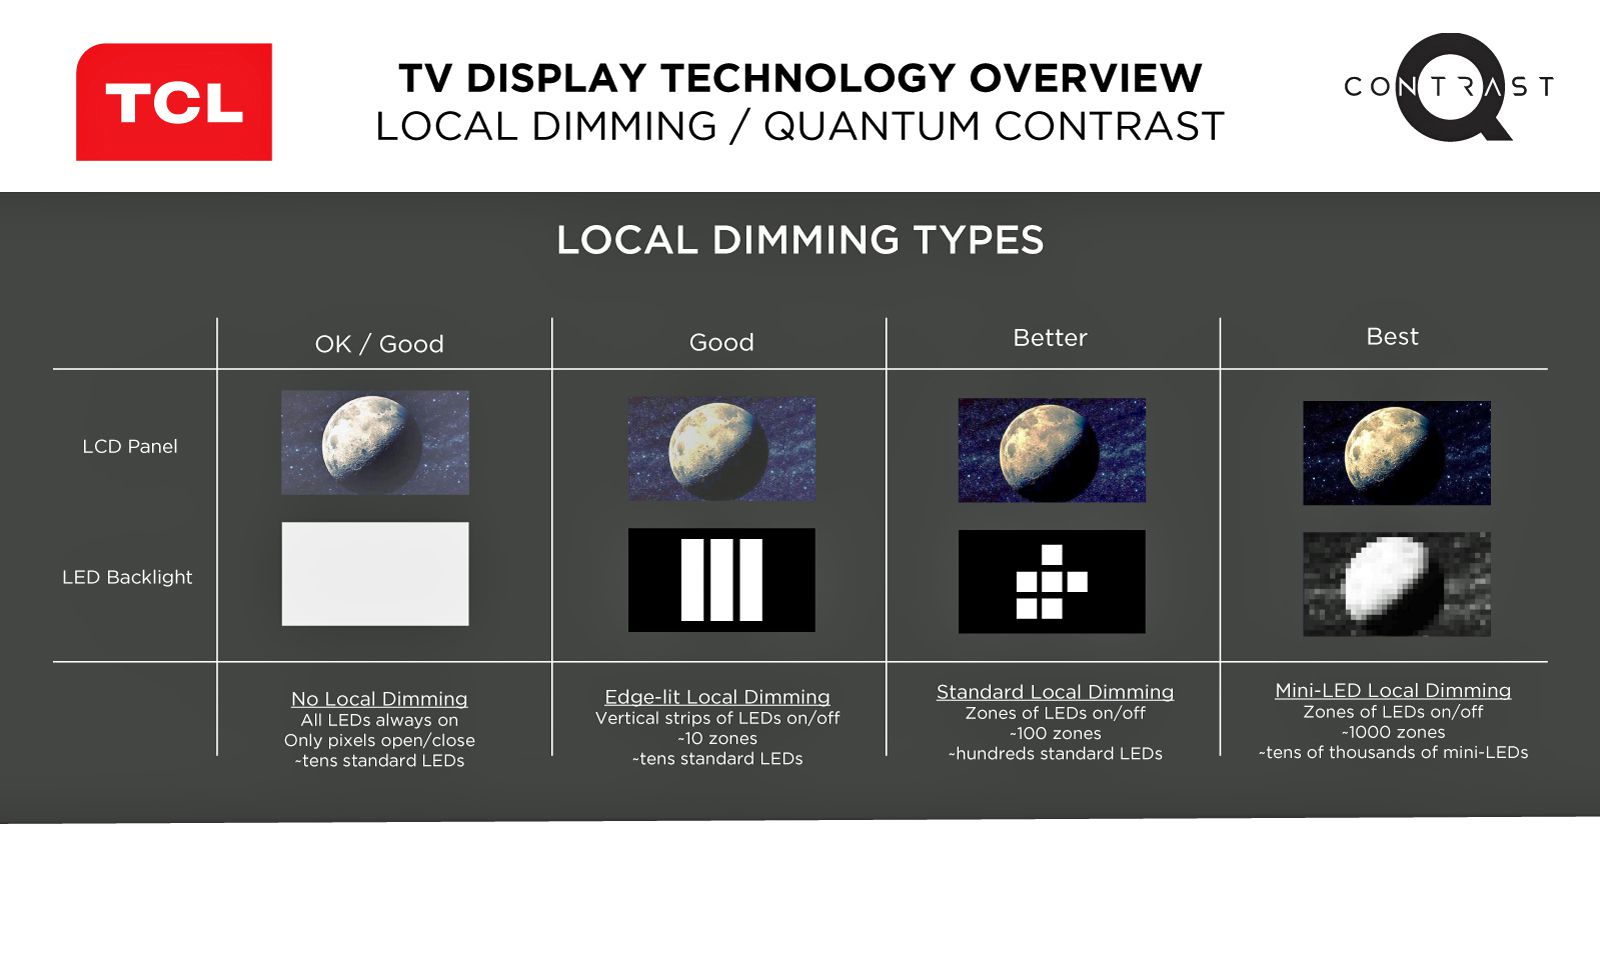 TCL Mini LED-kaart met lokale dimtypes voor LCD-panelen en LED-achtergrondverlichting